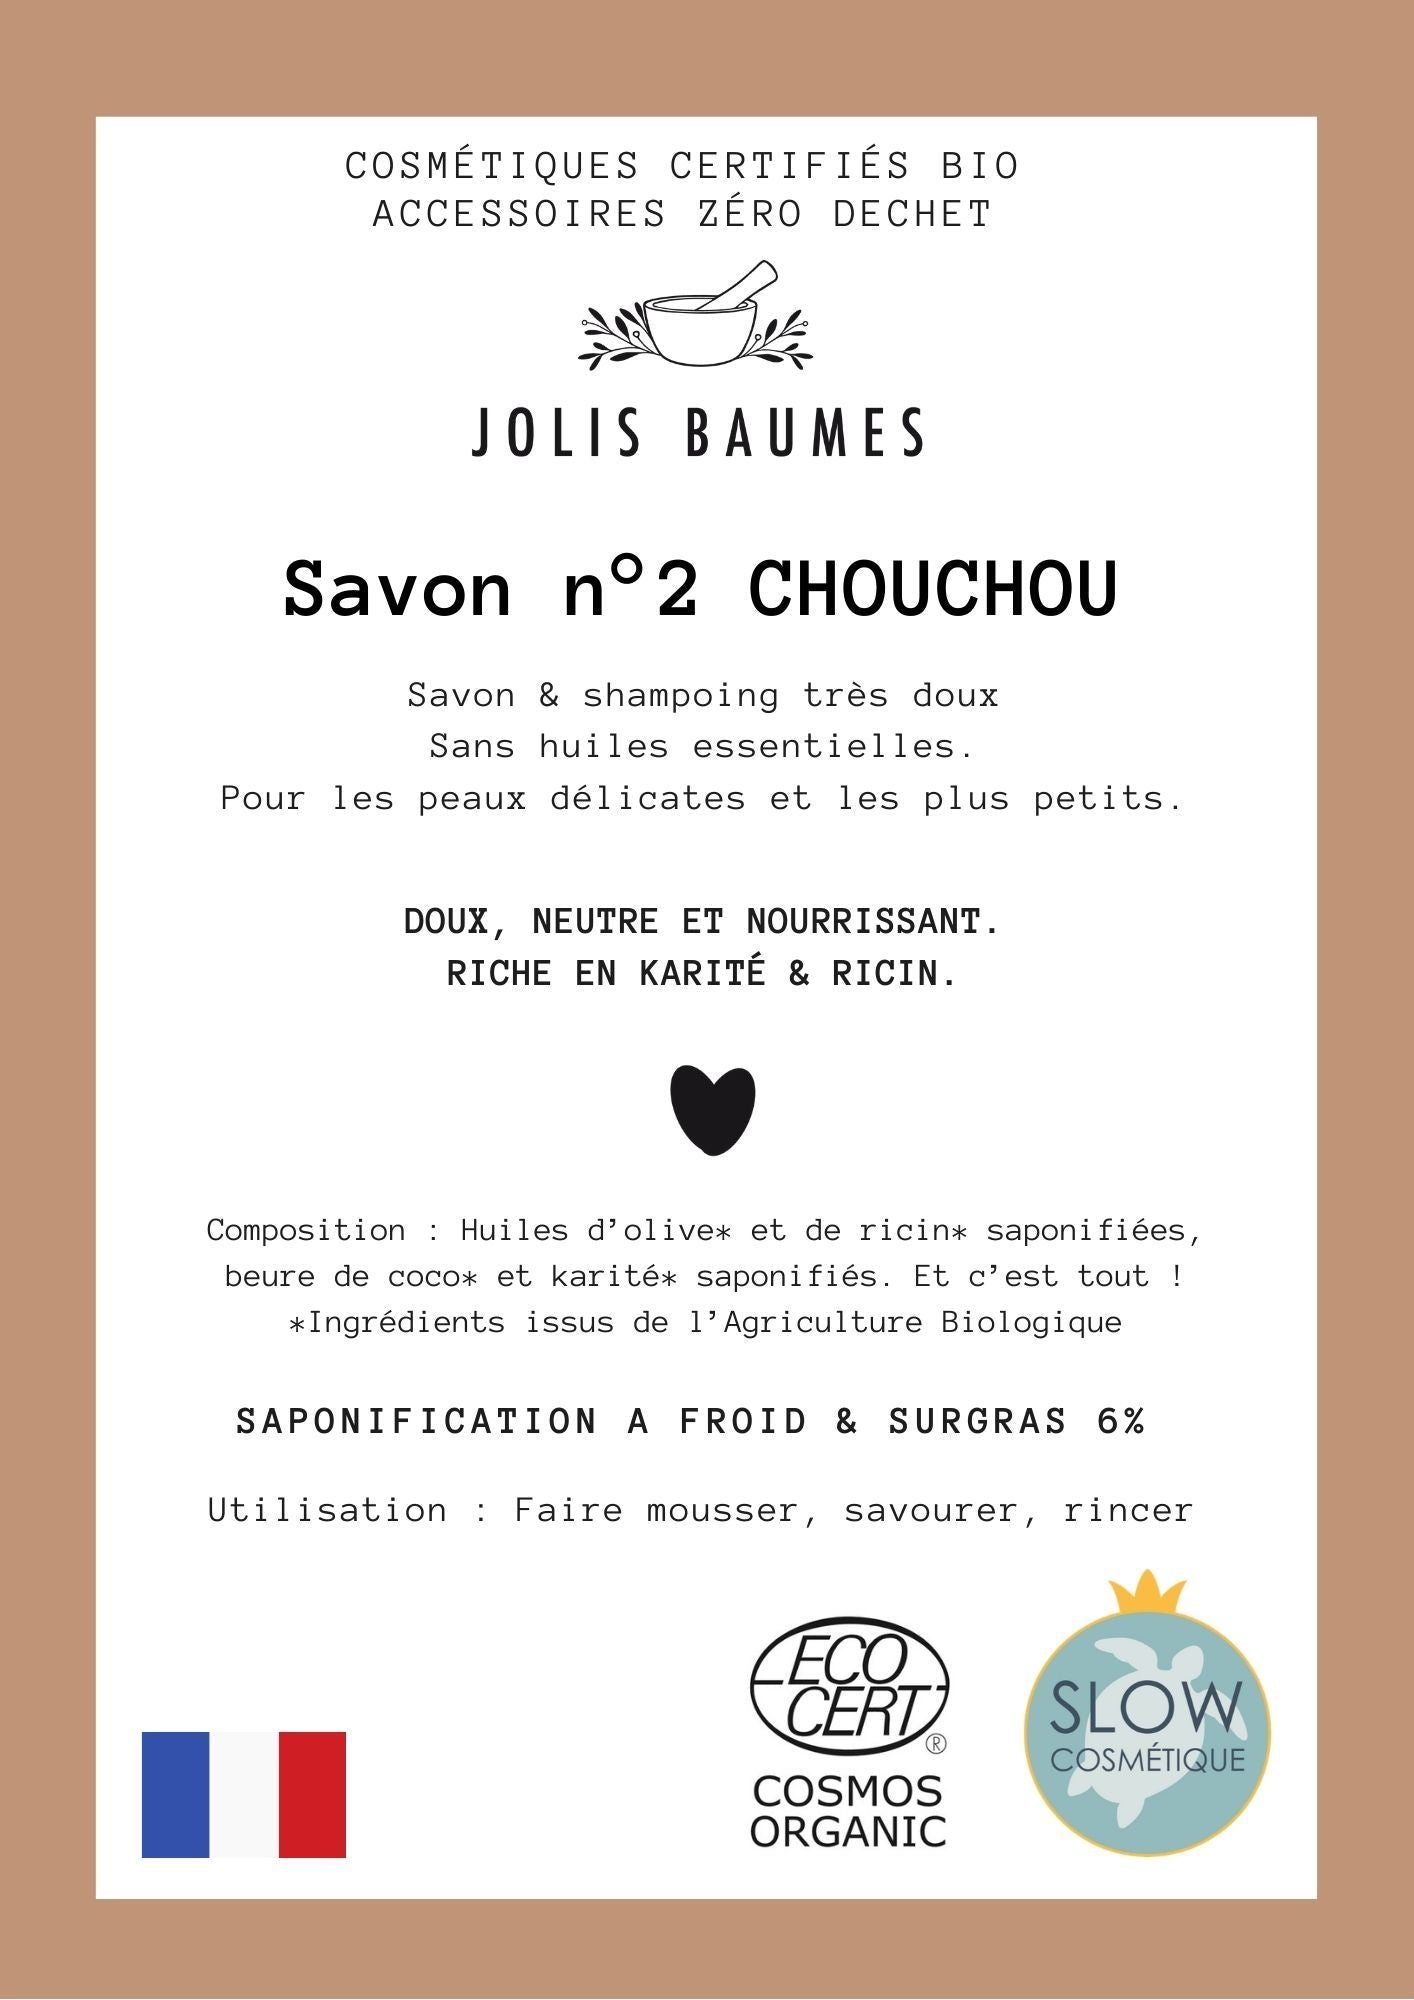 Jolis Baumes -- Savon n°2 chouchou bio - 100 g